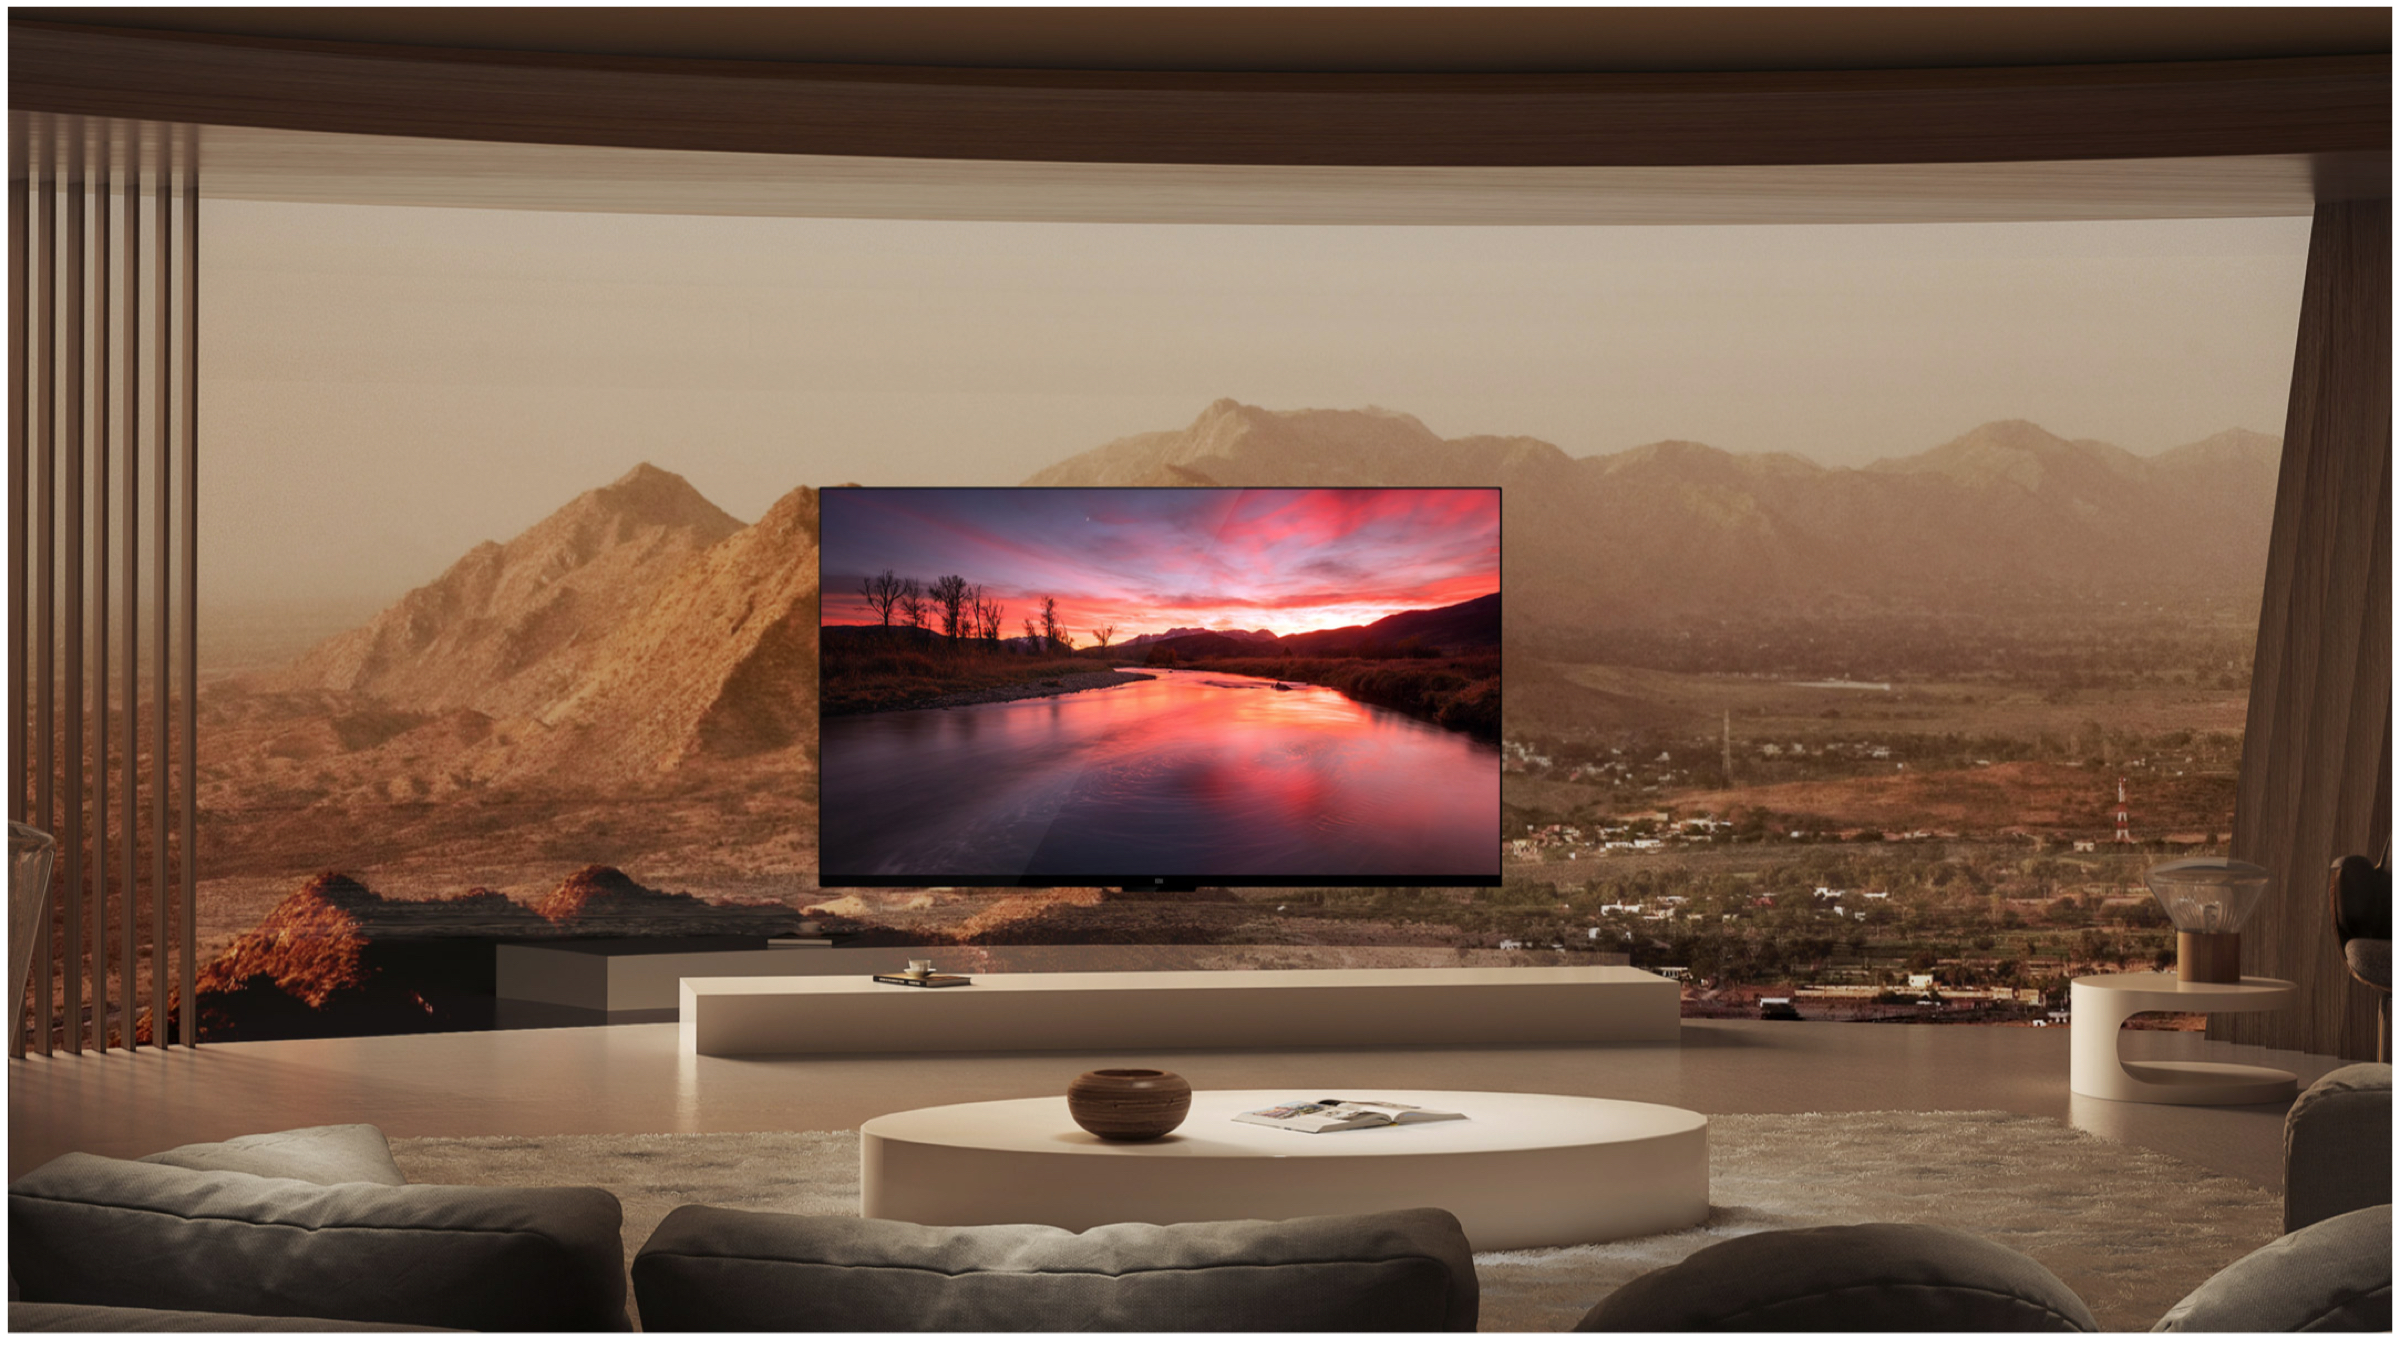 Mi LED TV 4 Pro Will Be Available Offline Via Vijay Sales.